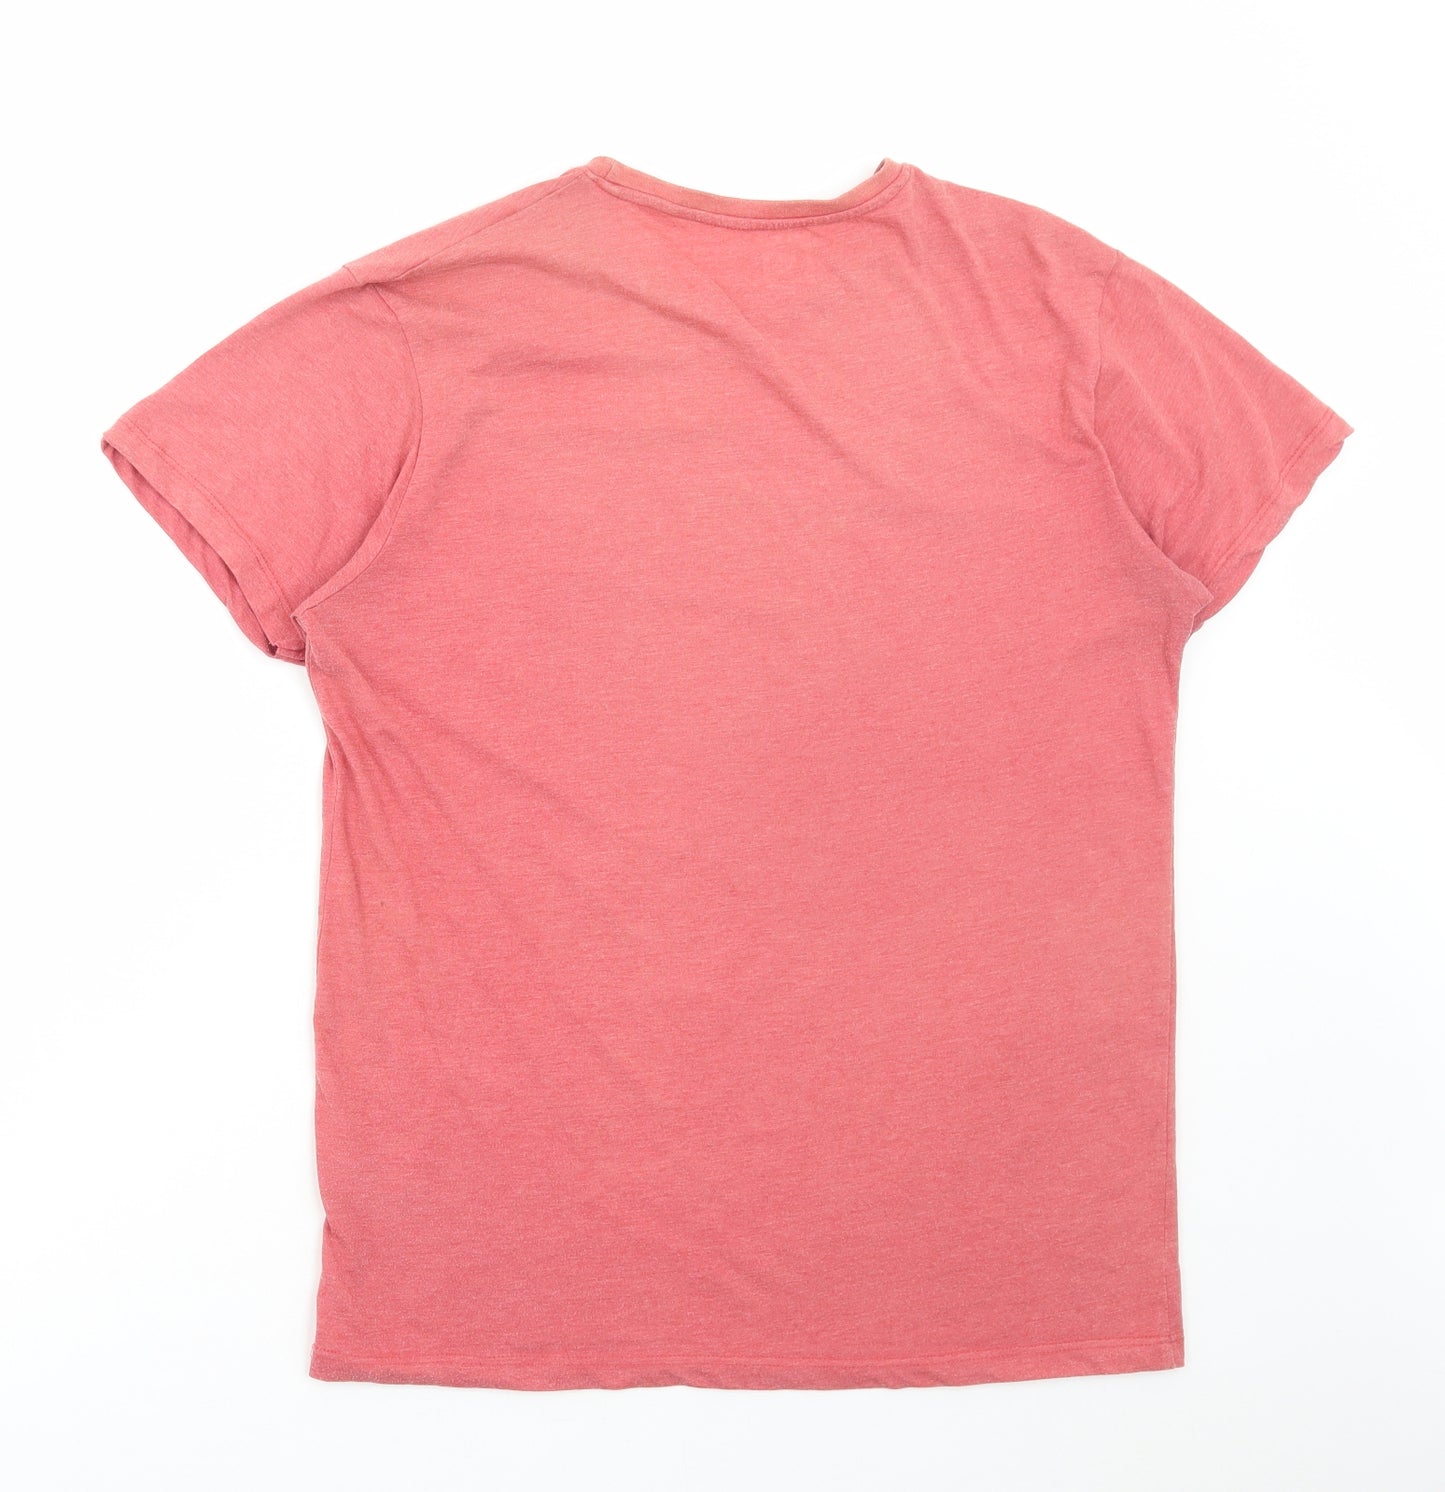 Cedar Wood State Mens Pink Cotton T-Shirt Size M Round Neck - Track & Field